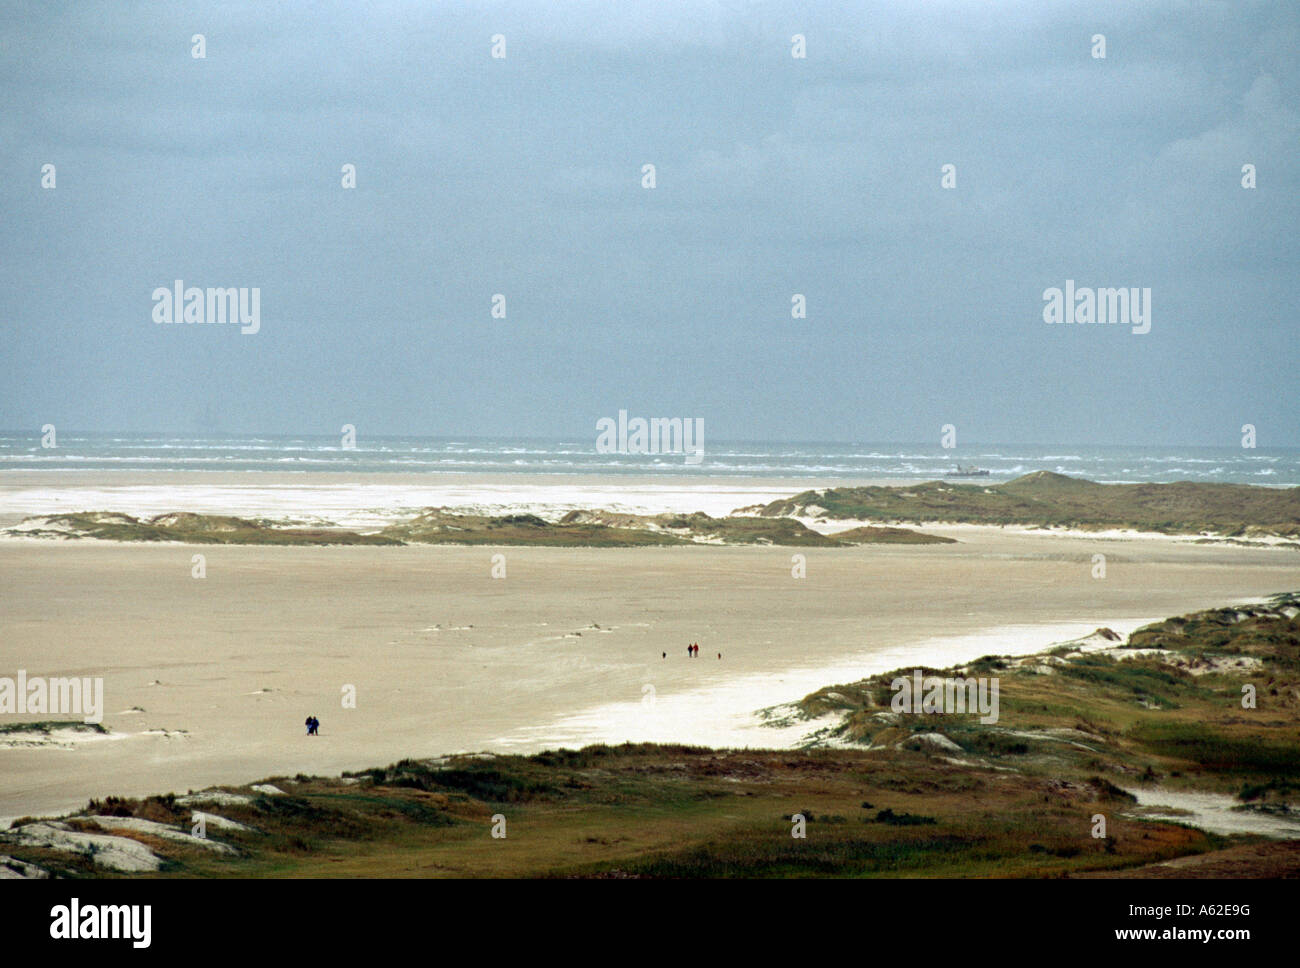 Nan Coastal Causeway Keilrahmen-Bild Leinwand Küste Meer Strand Weg Dünen